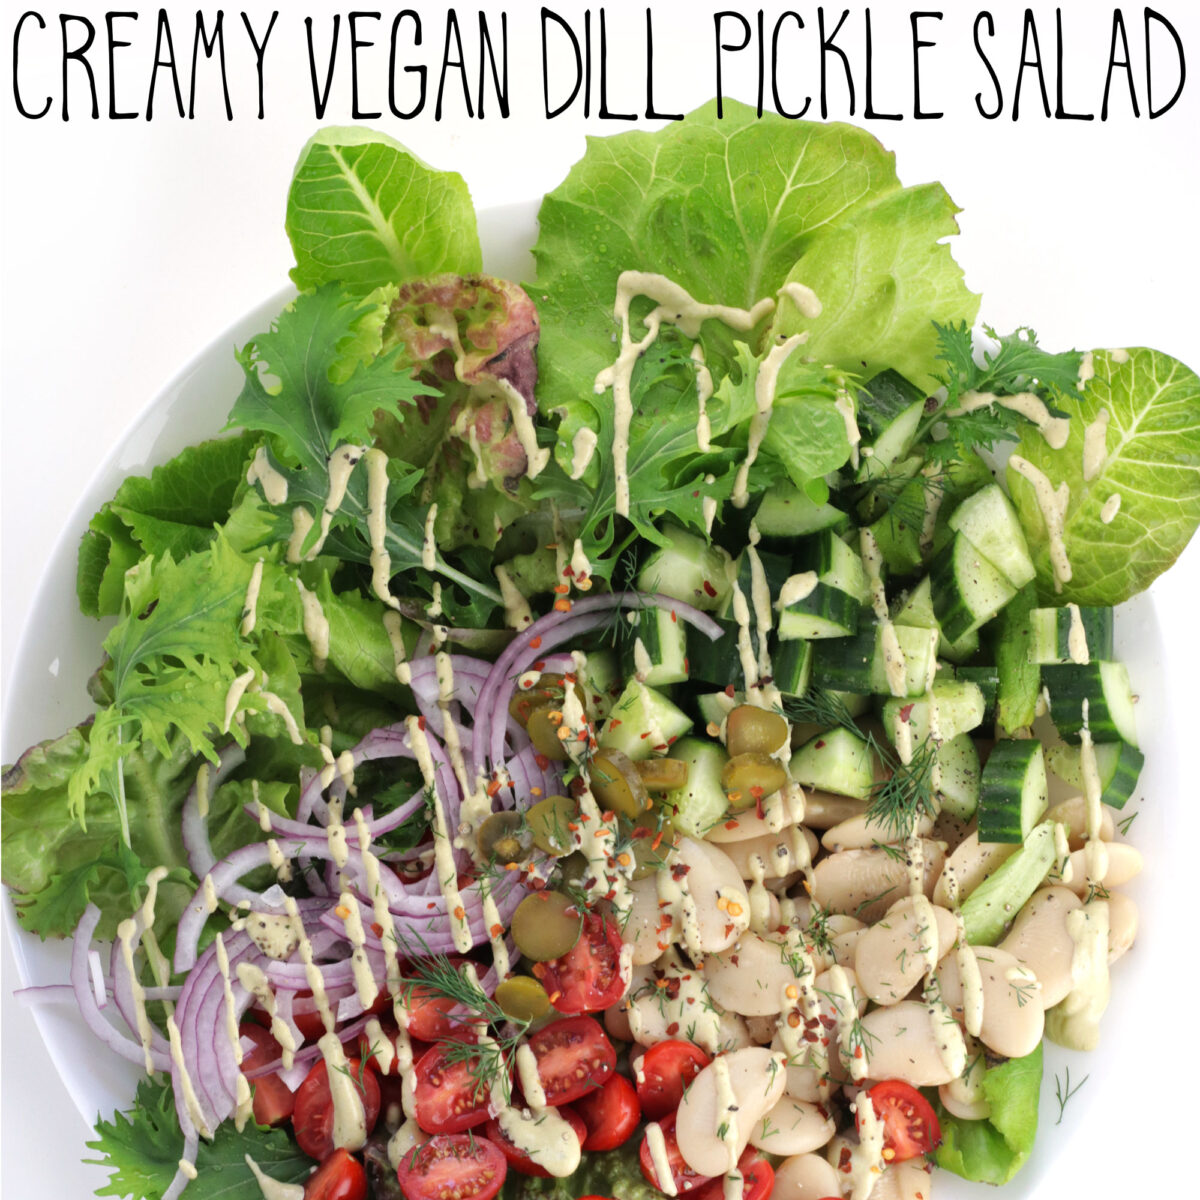 Creamy Vegan Dill Pickle Salad